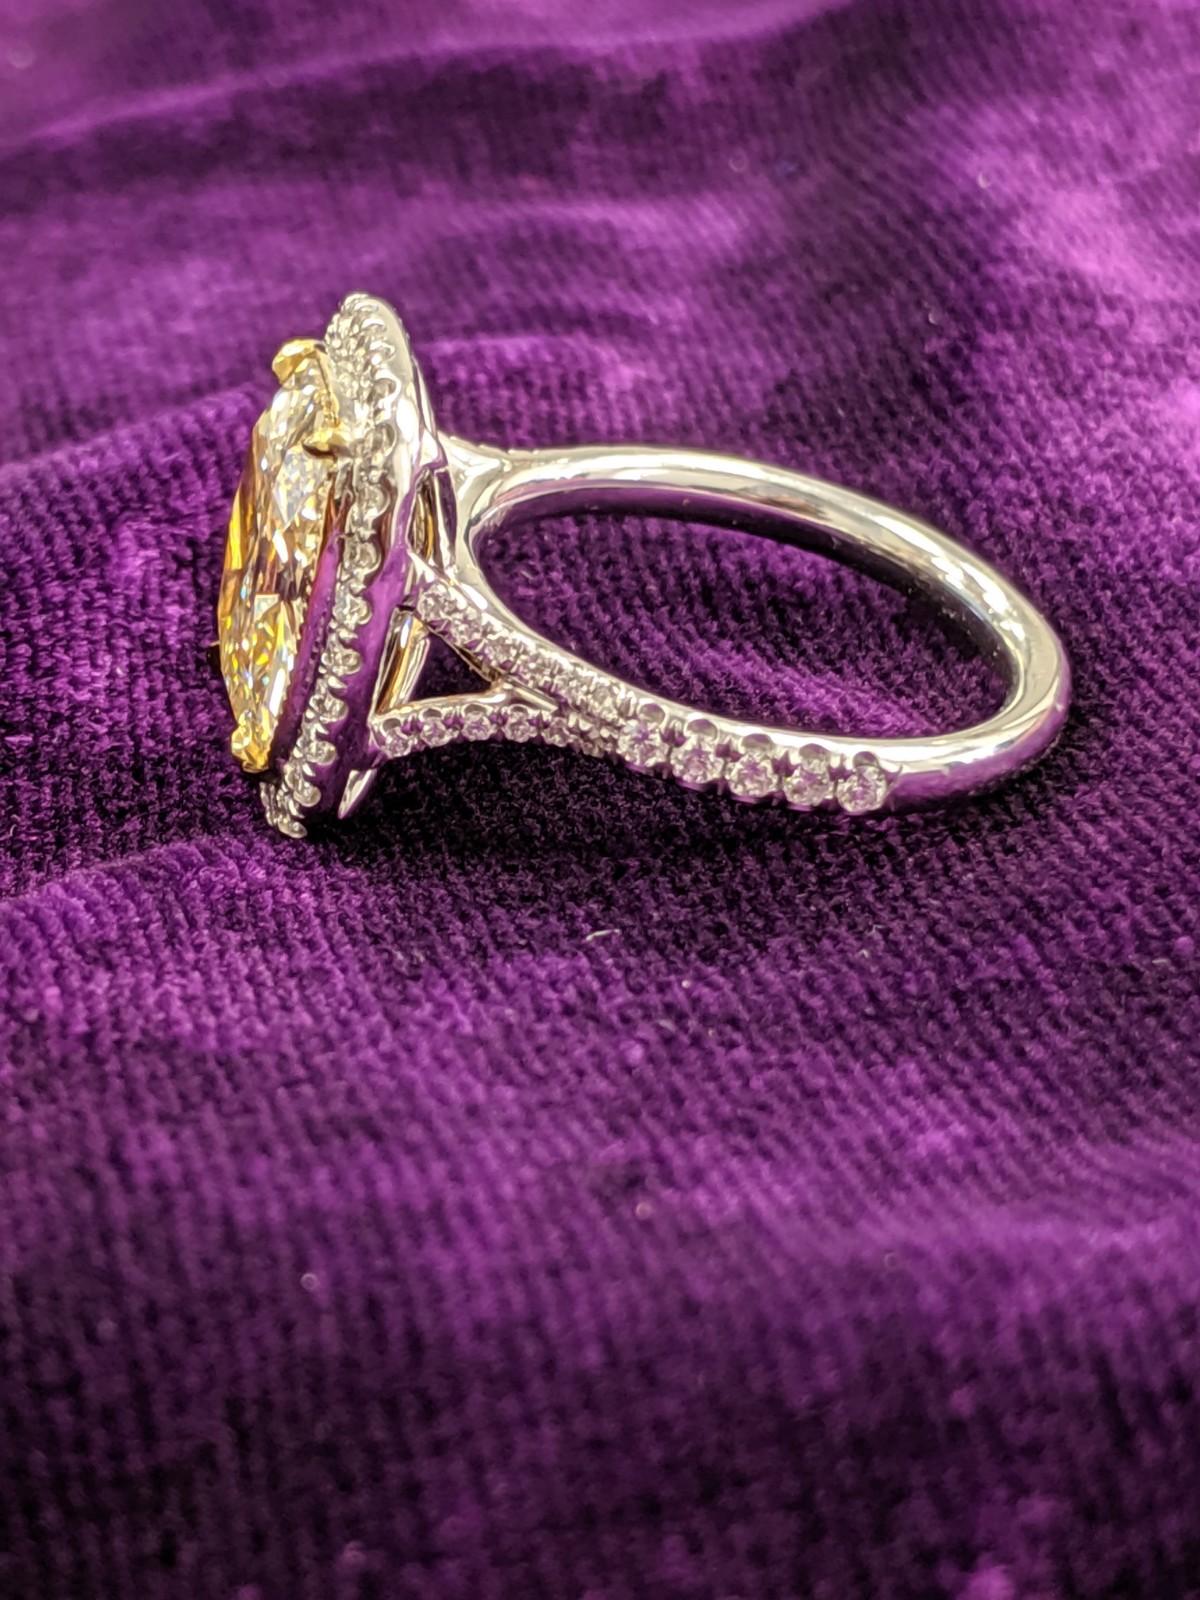 Contemporary 3.40 Carat Light Yellow VS1 Cushion Cut Diamond Ring in 18 Karat Gold